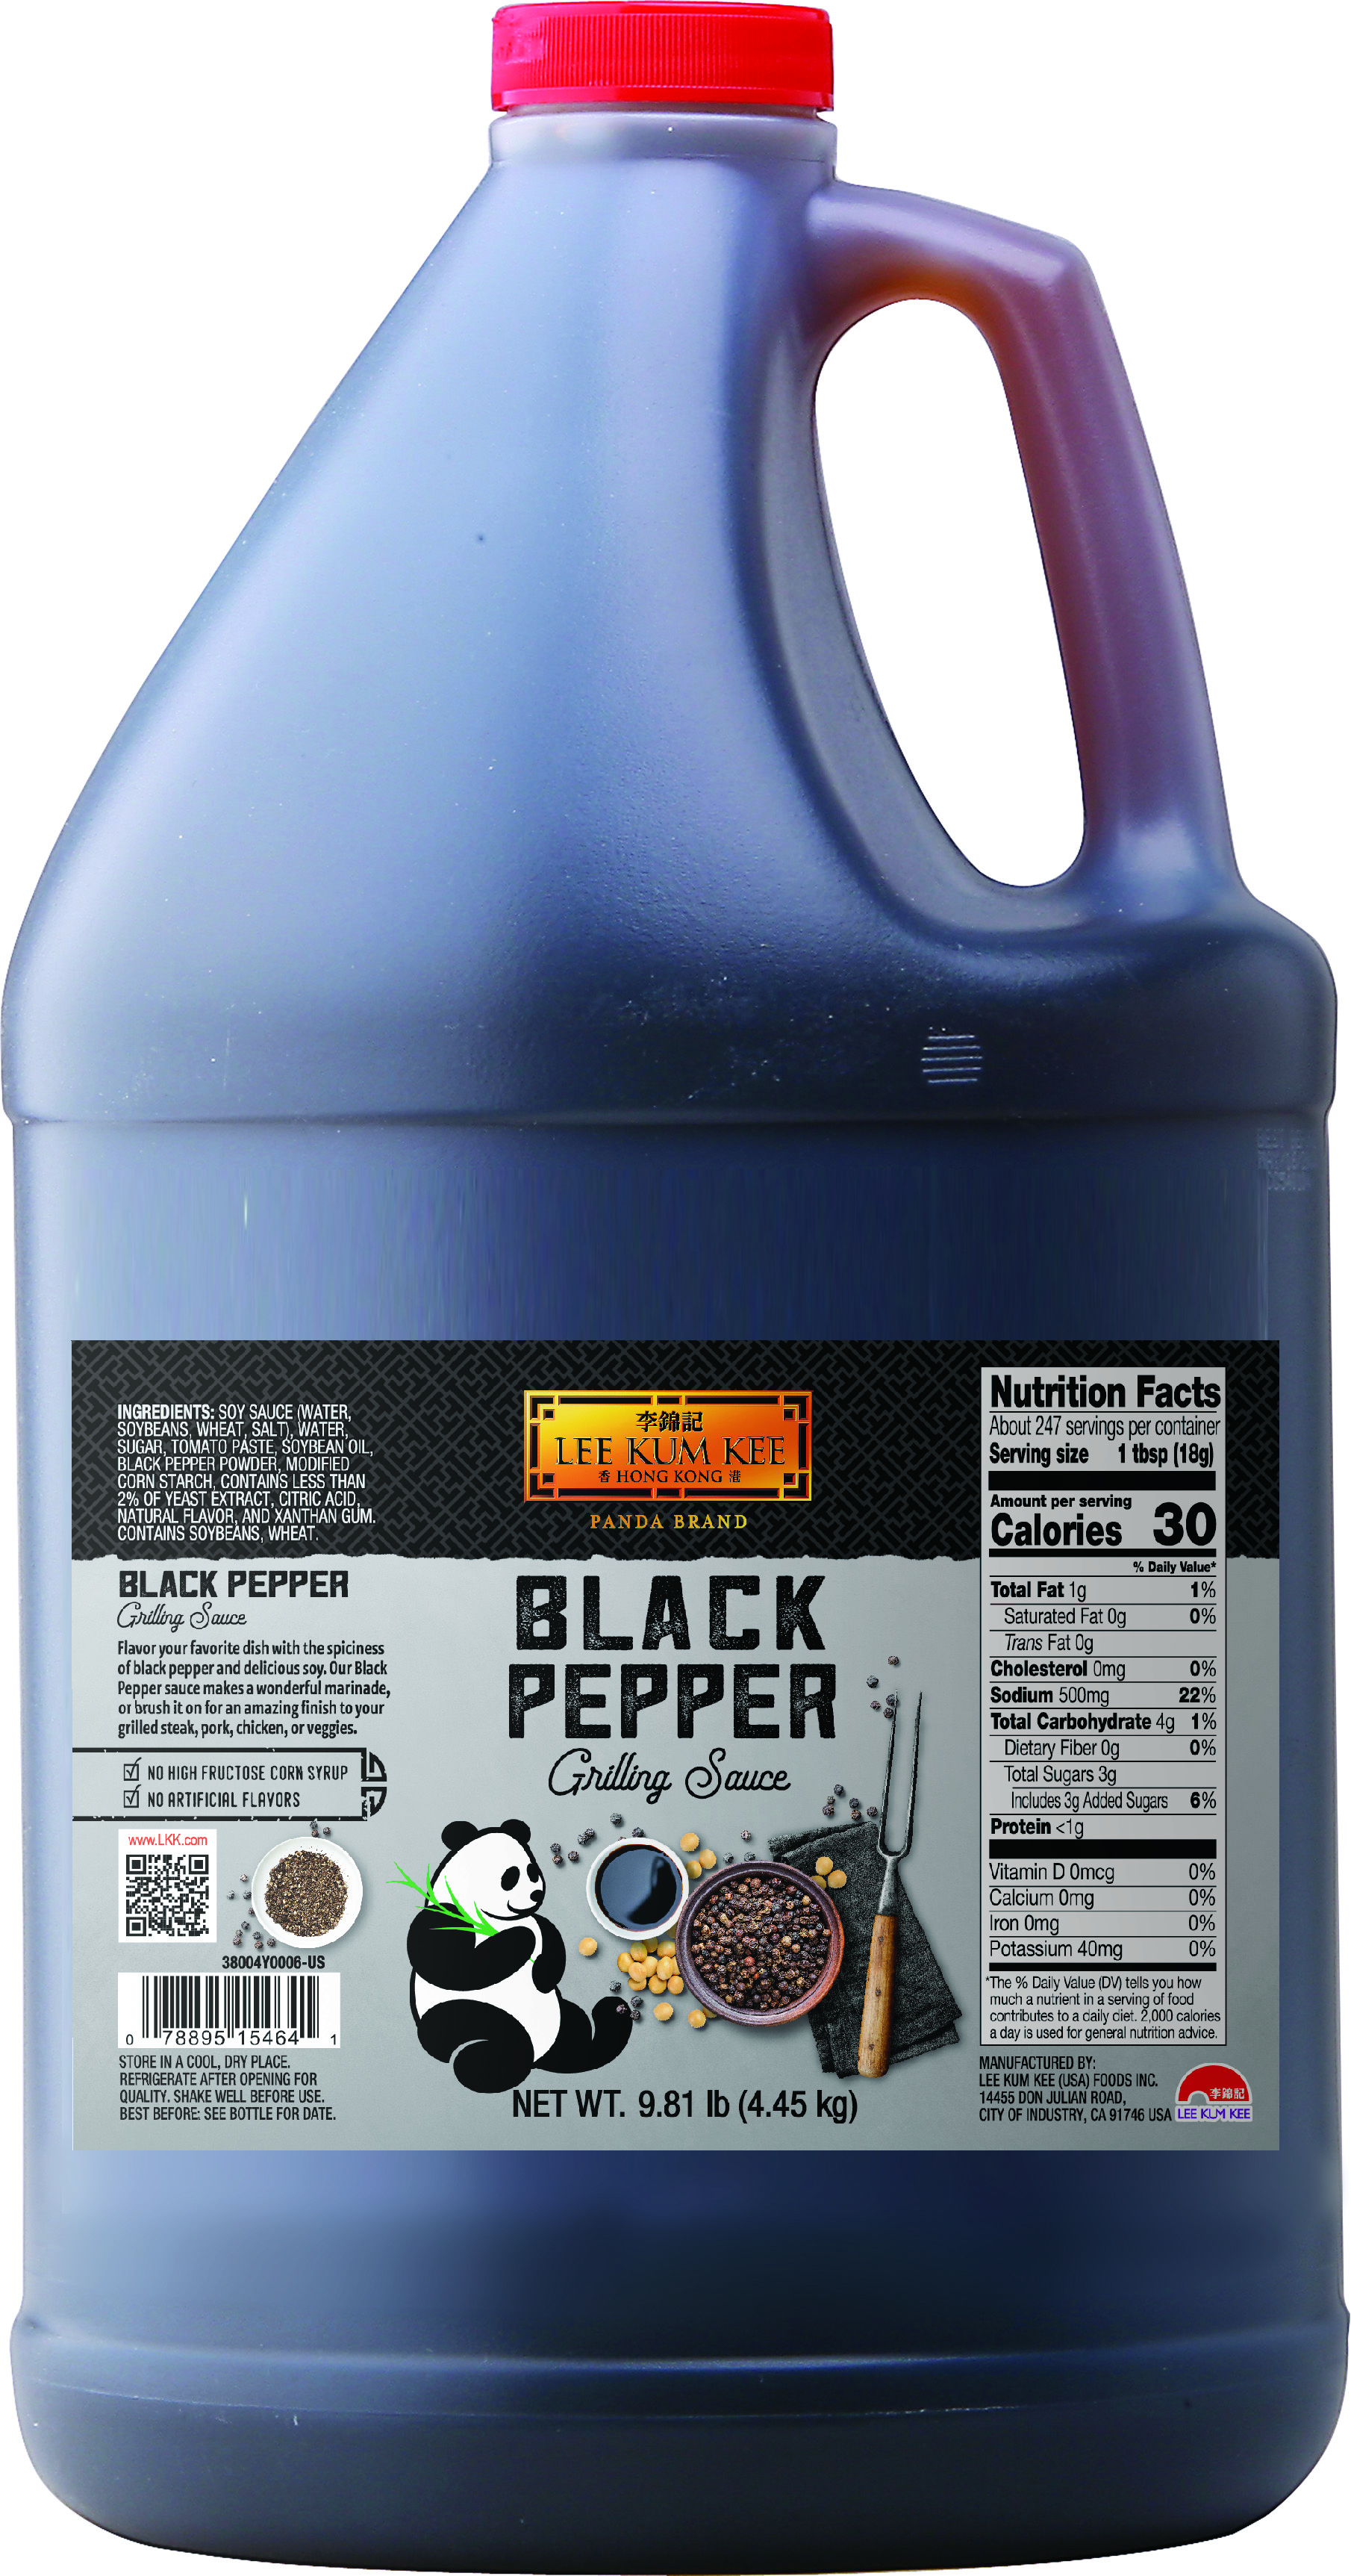 Panda Brand Black Pepper Grilling Sauce  USA